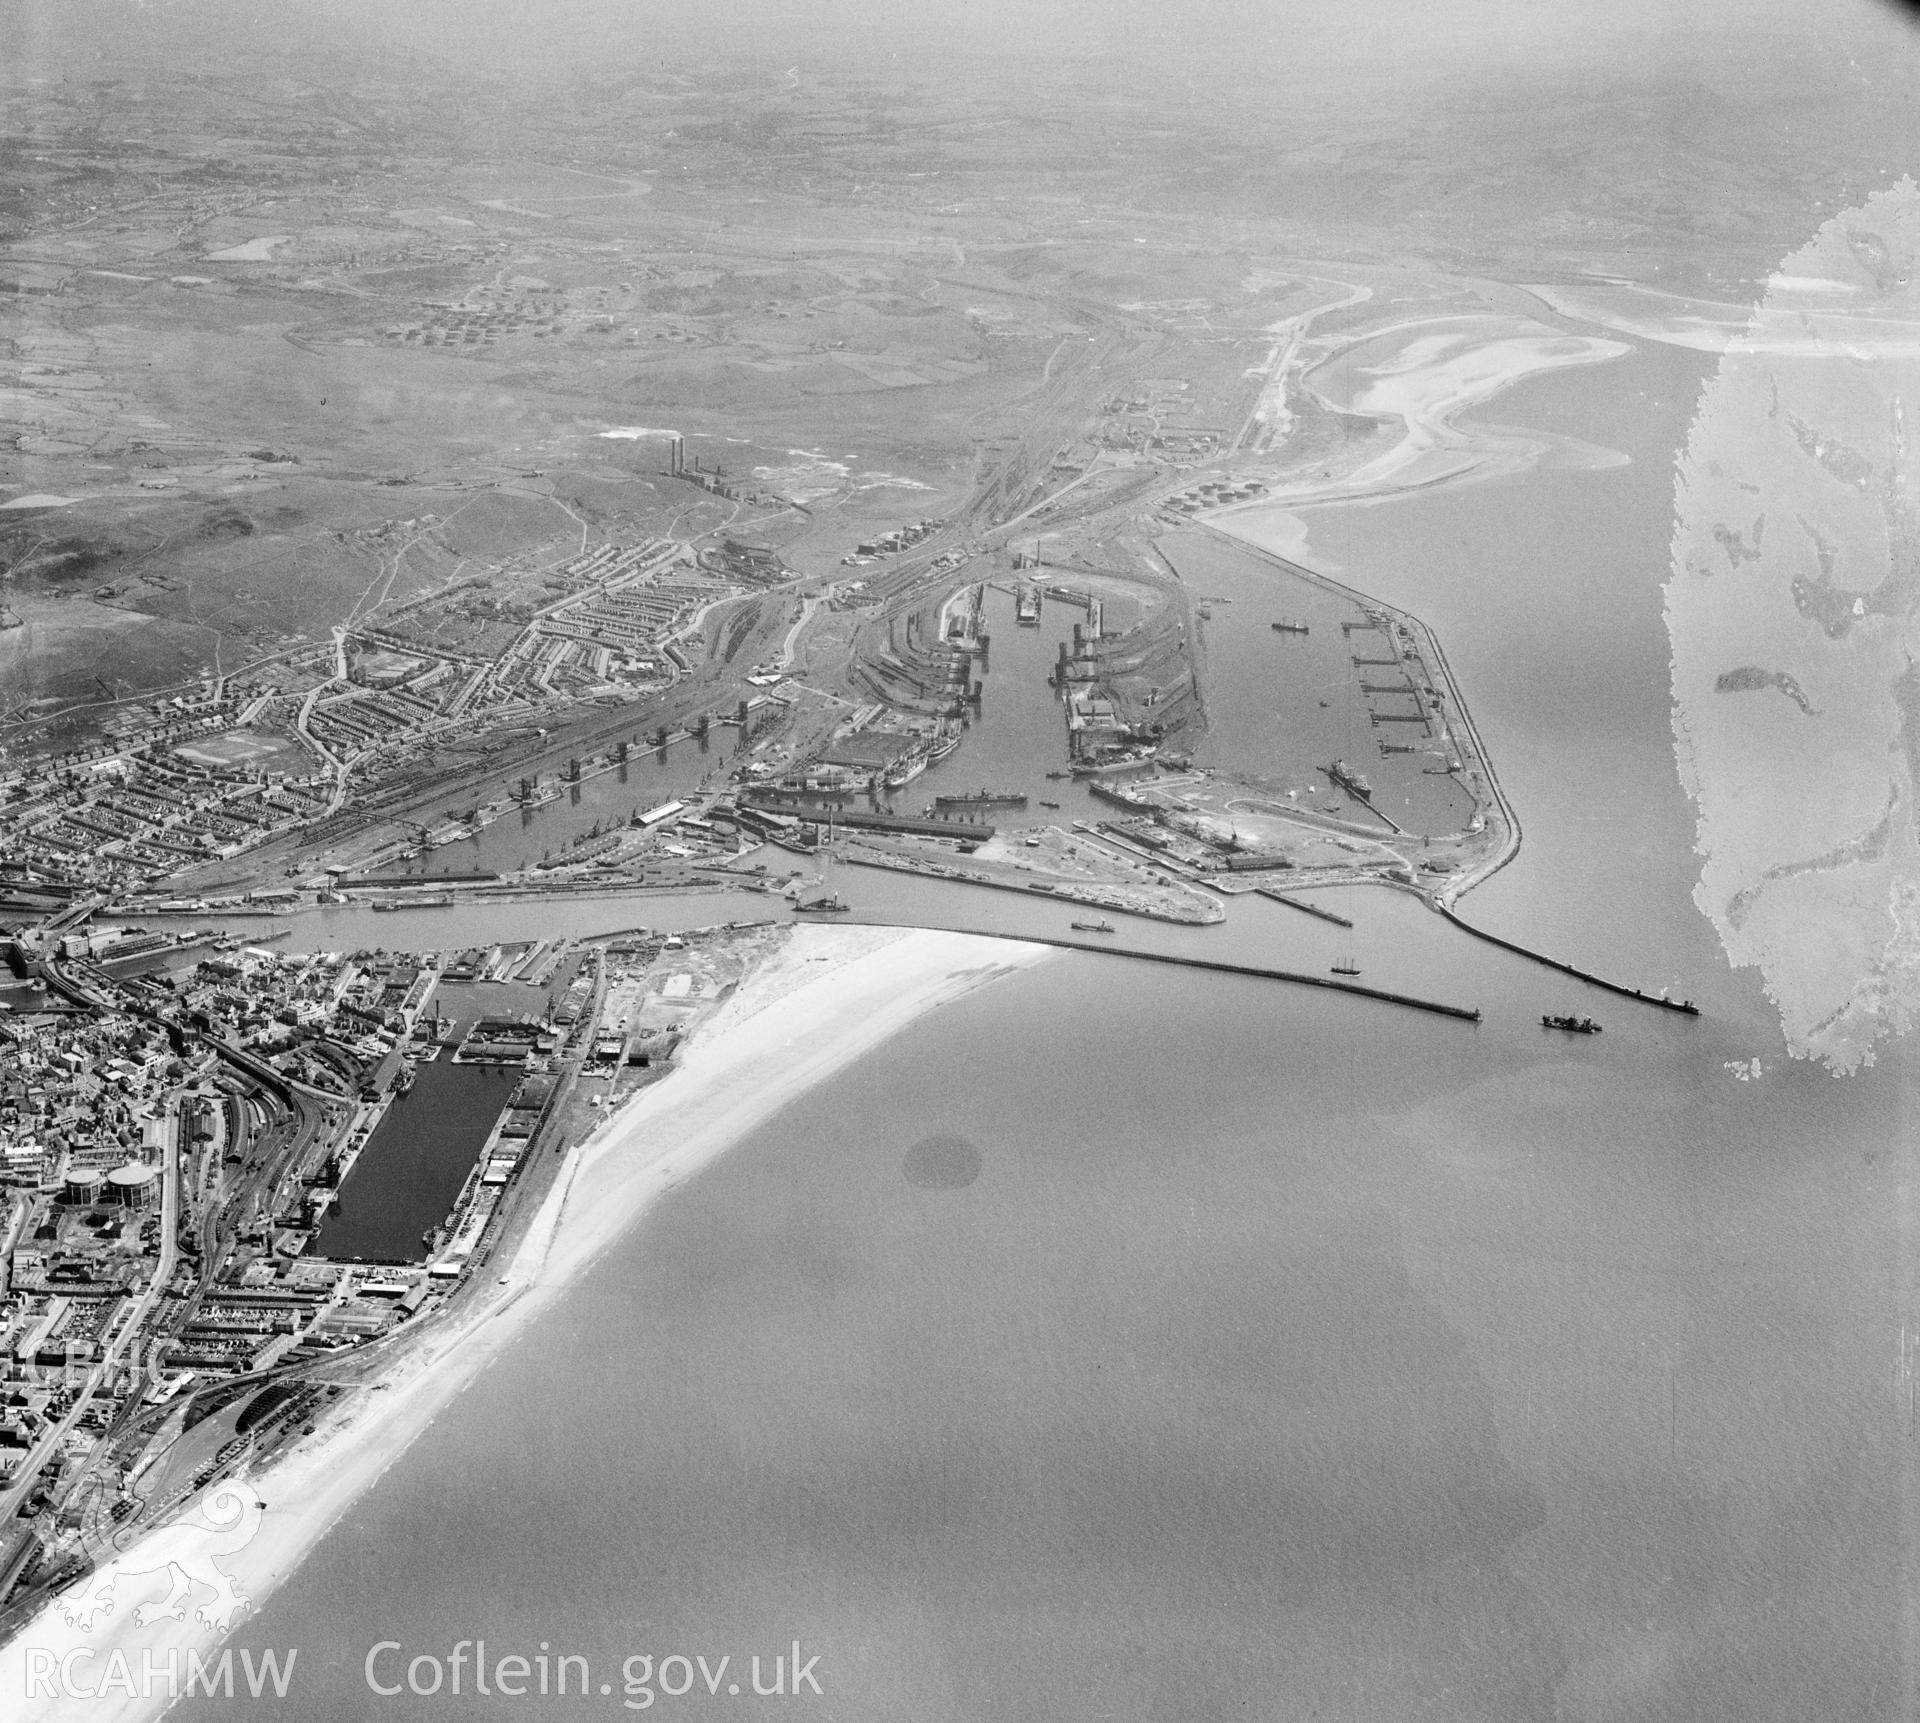 General view of Swansea showing docks